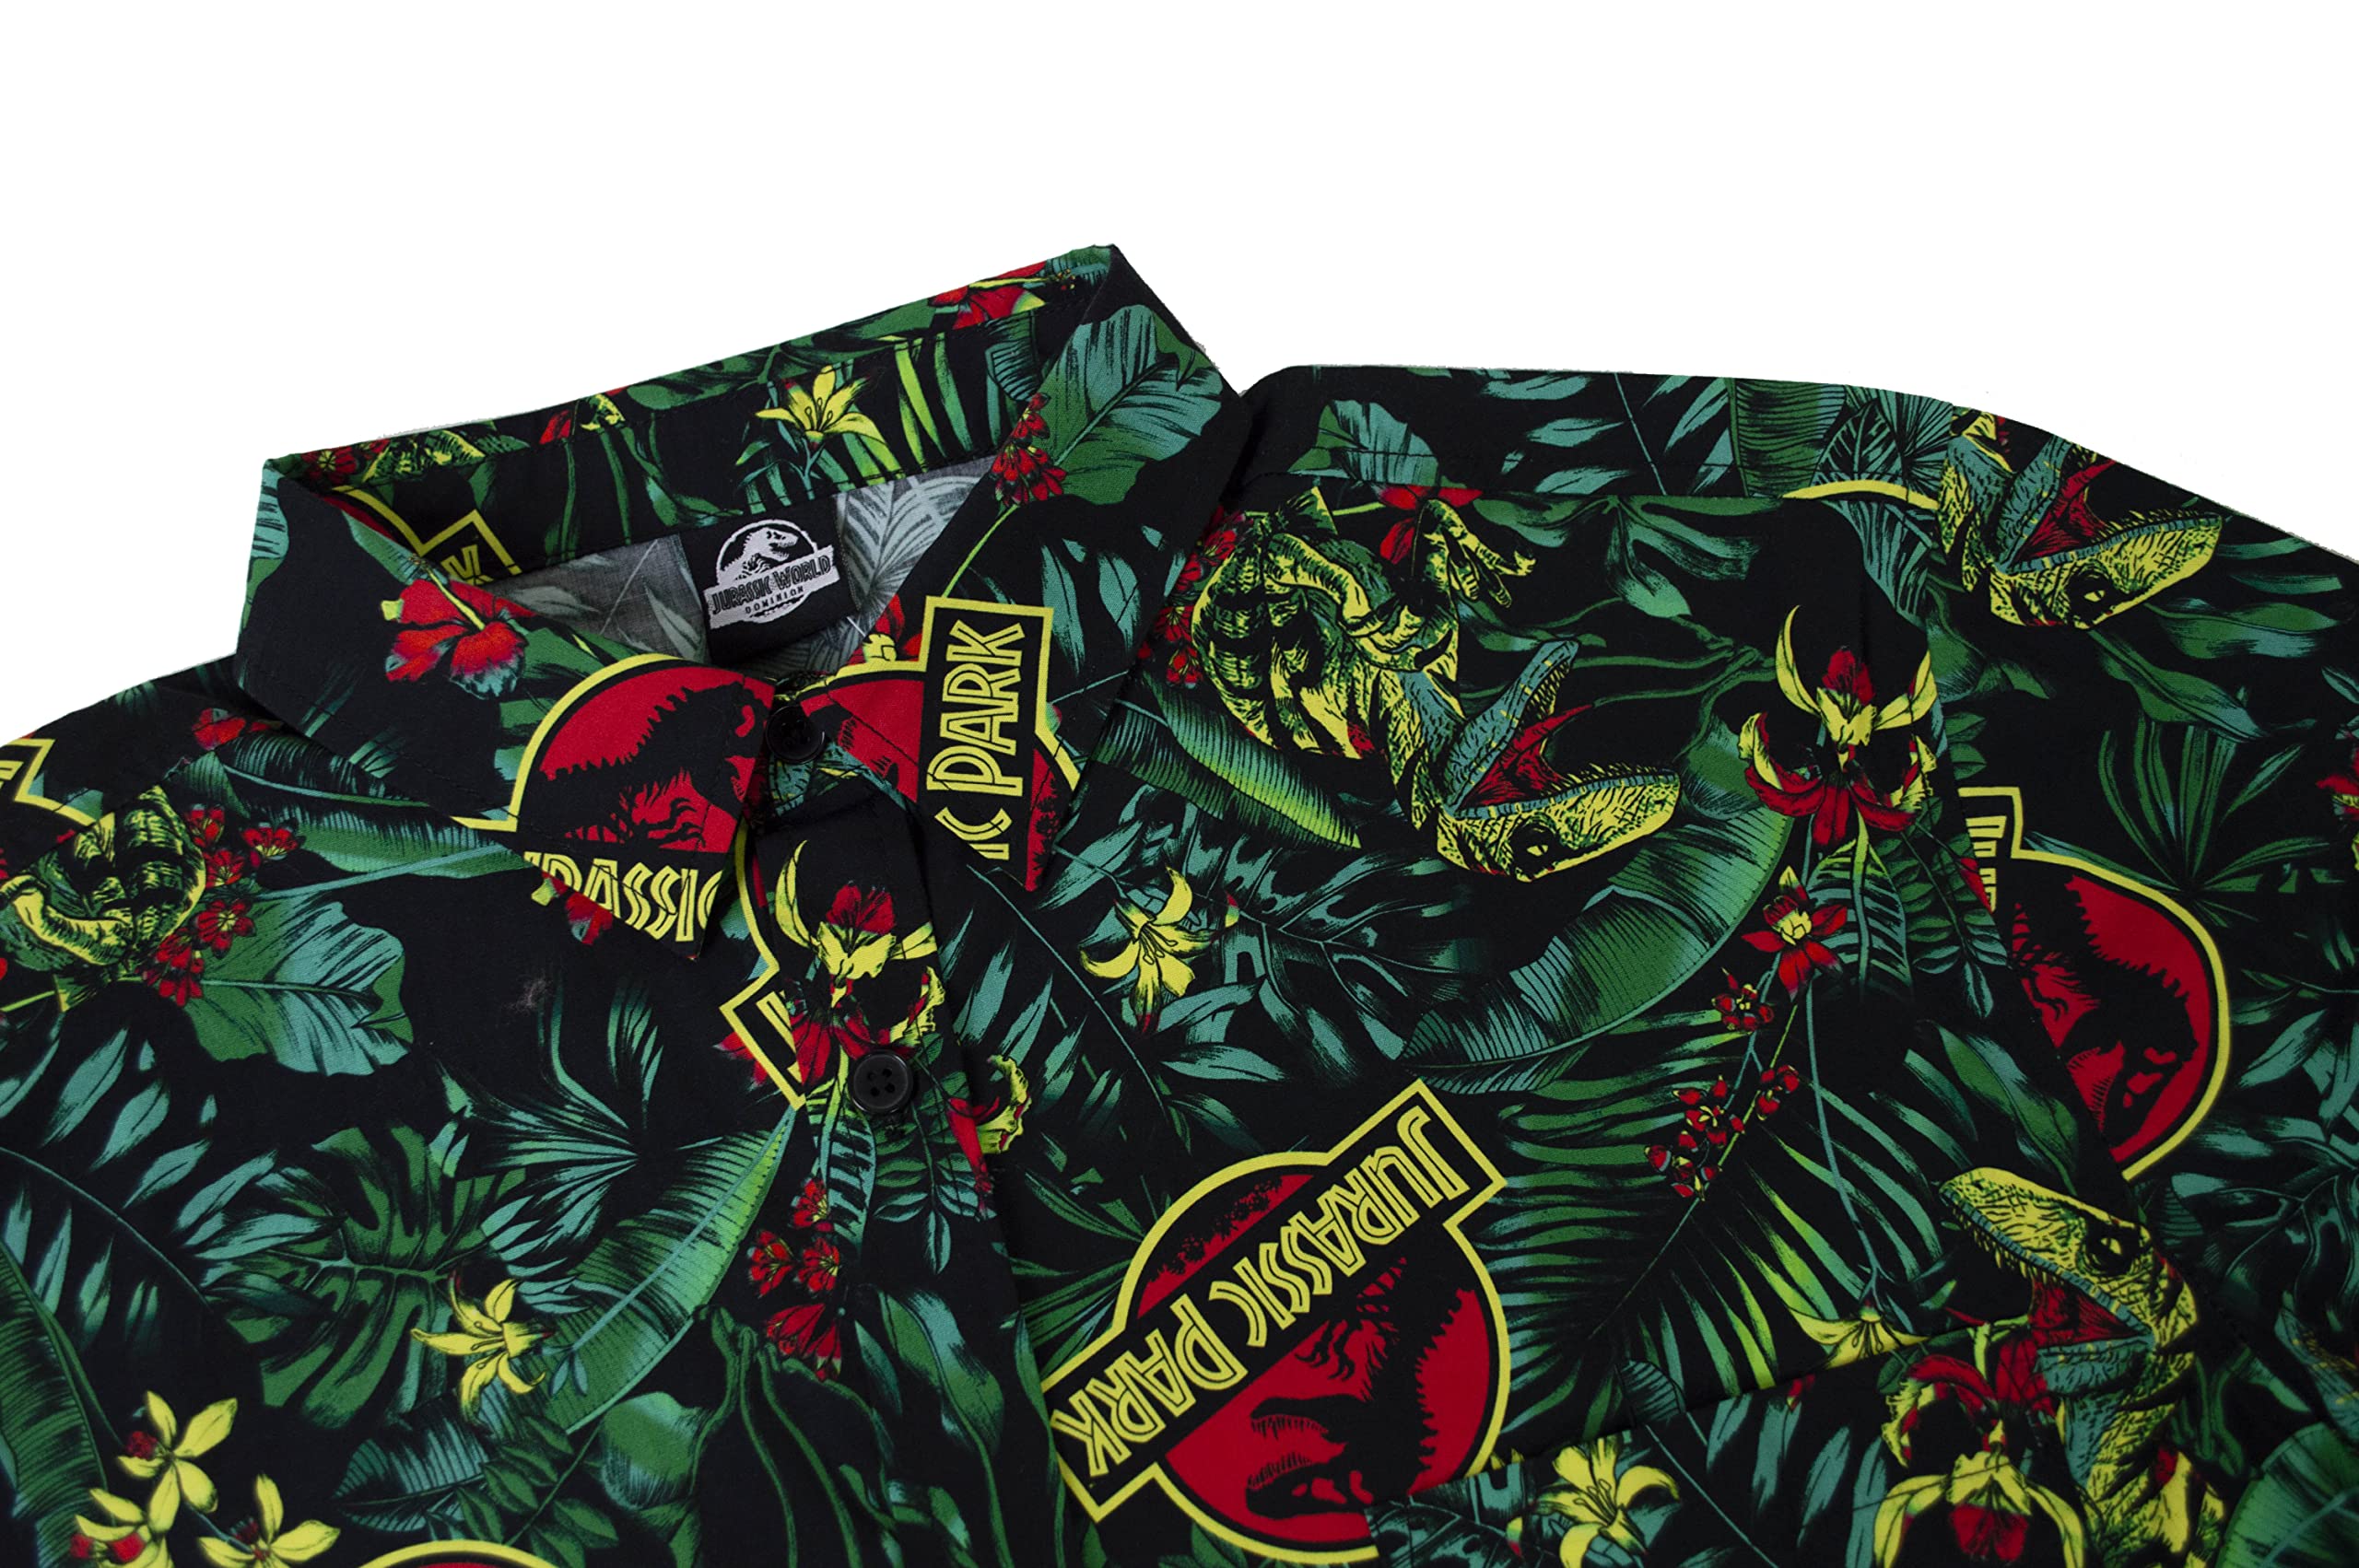 Jurassic Park Men's Tropical Raptor Pattern Button Down Shirt